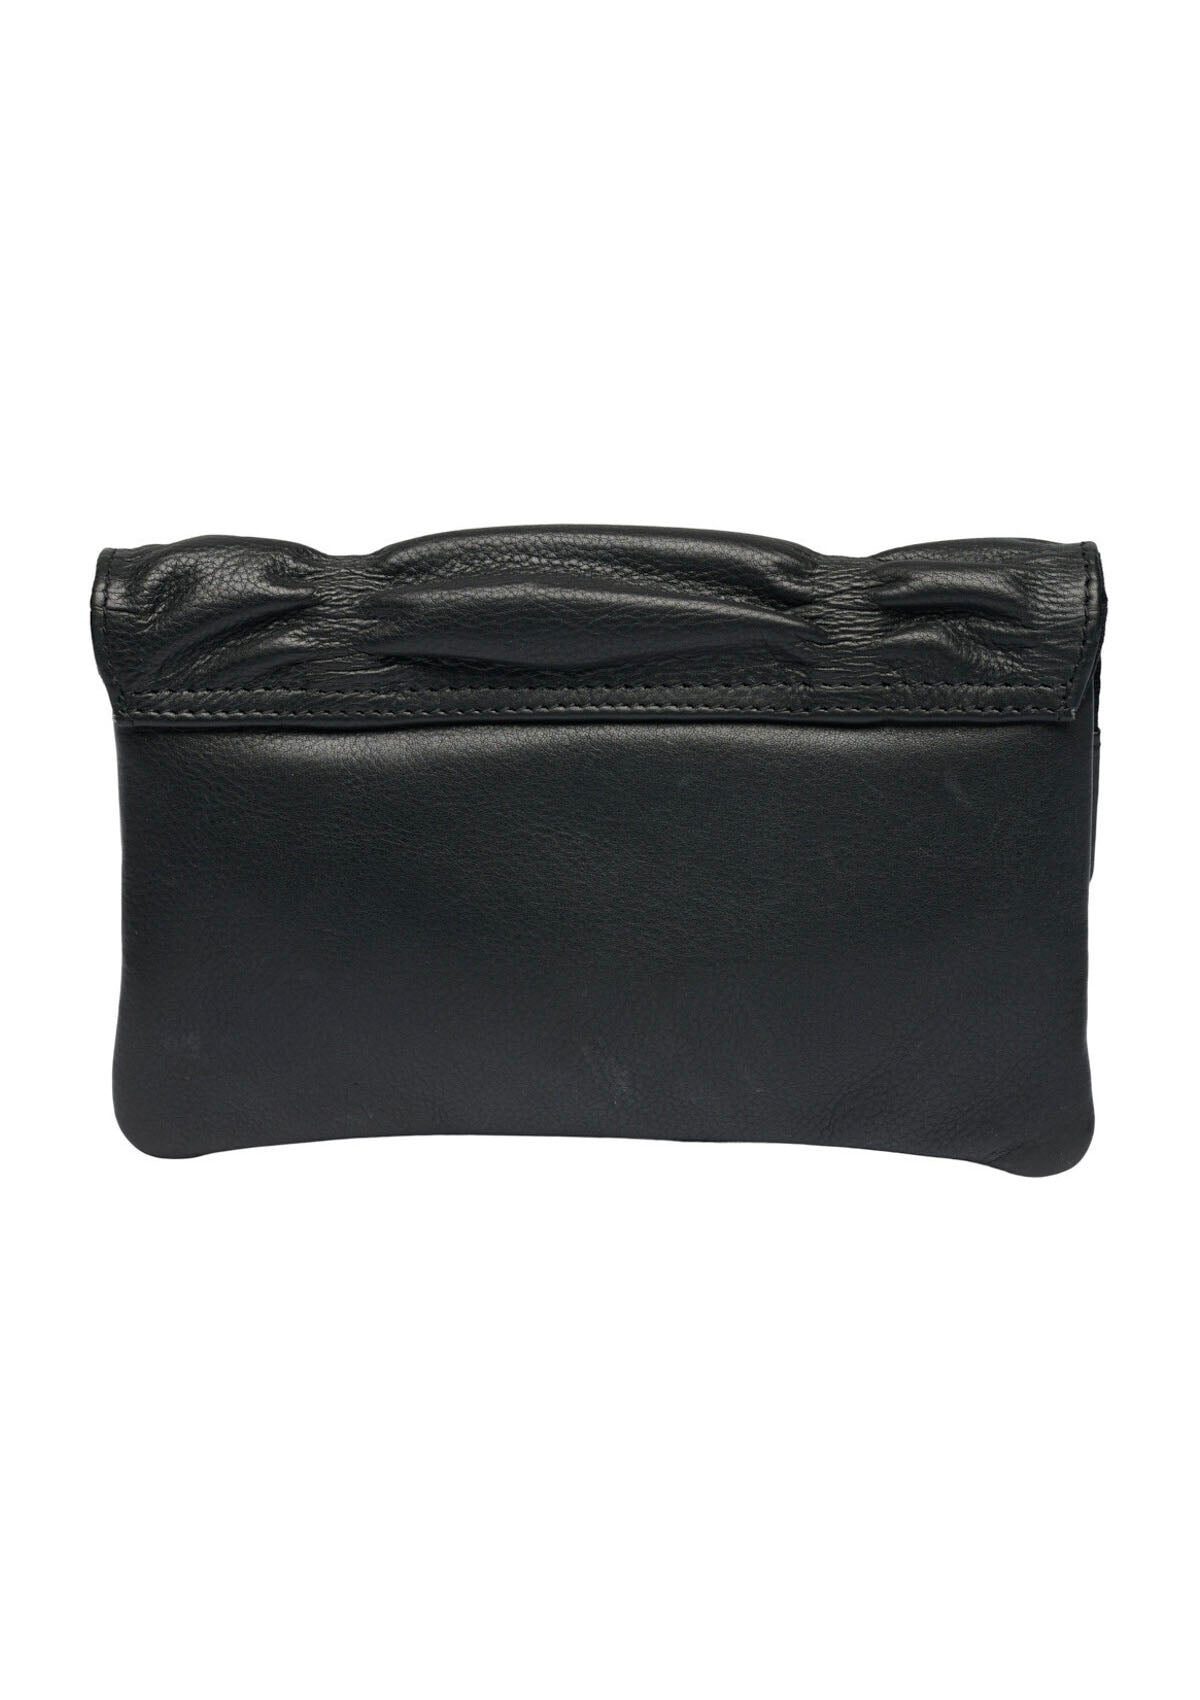 Tim & Simonsen Black Leather Clutch Bag